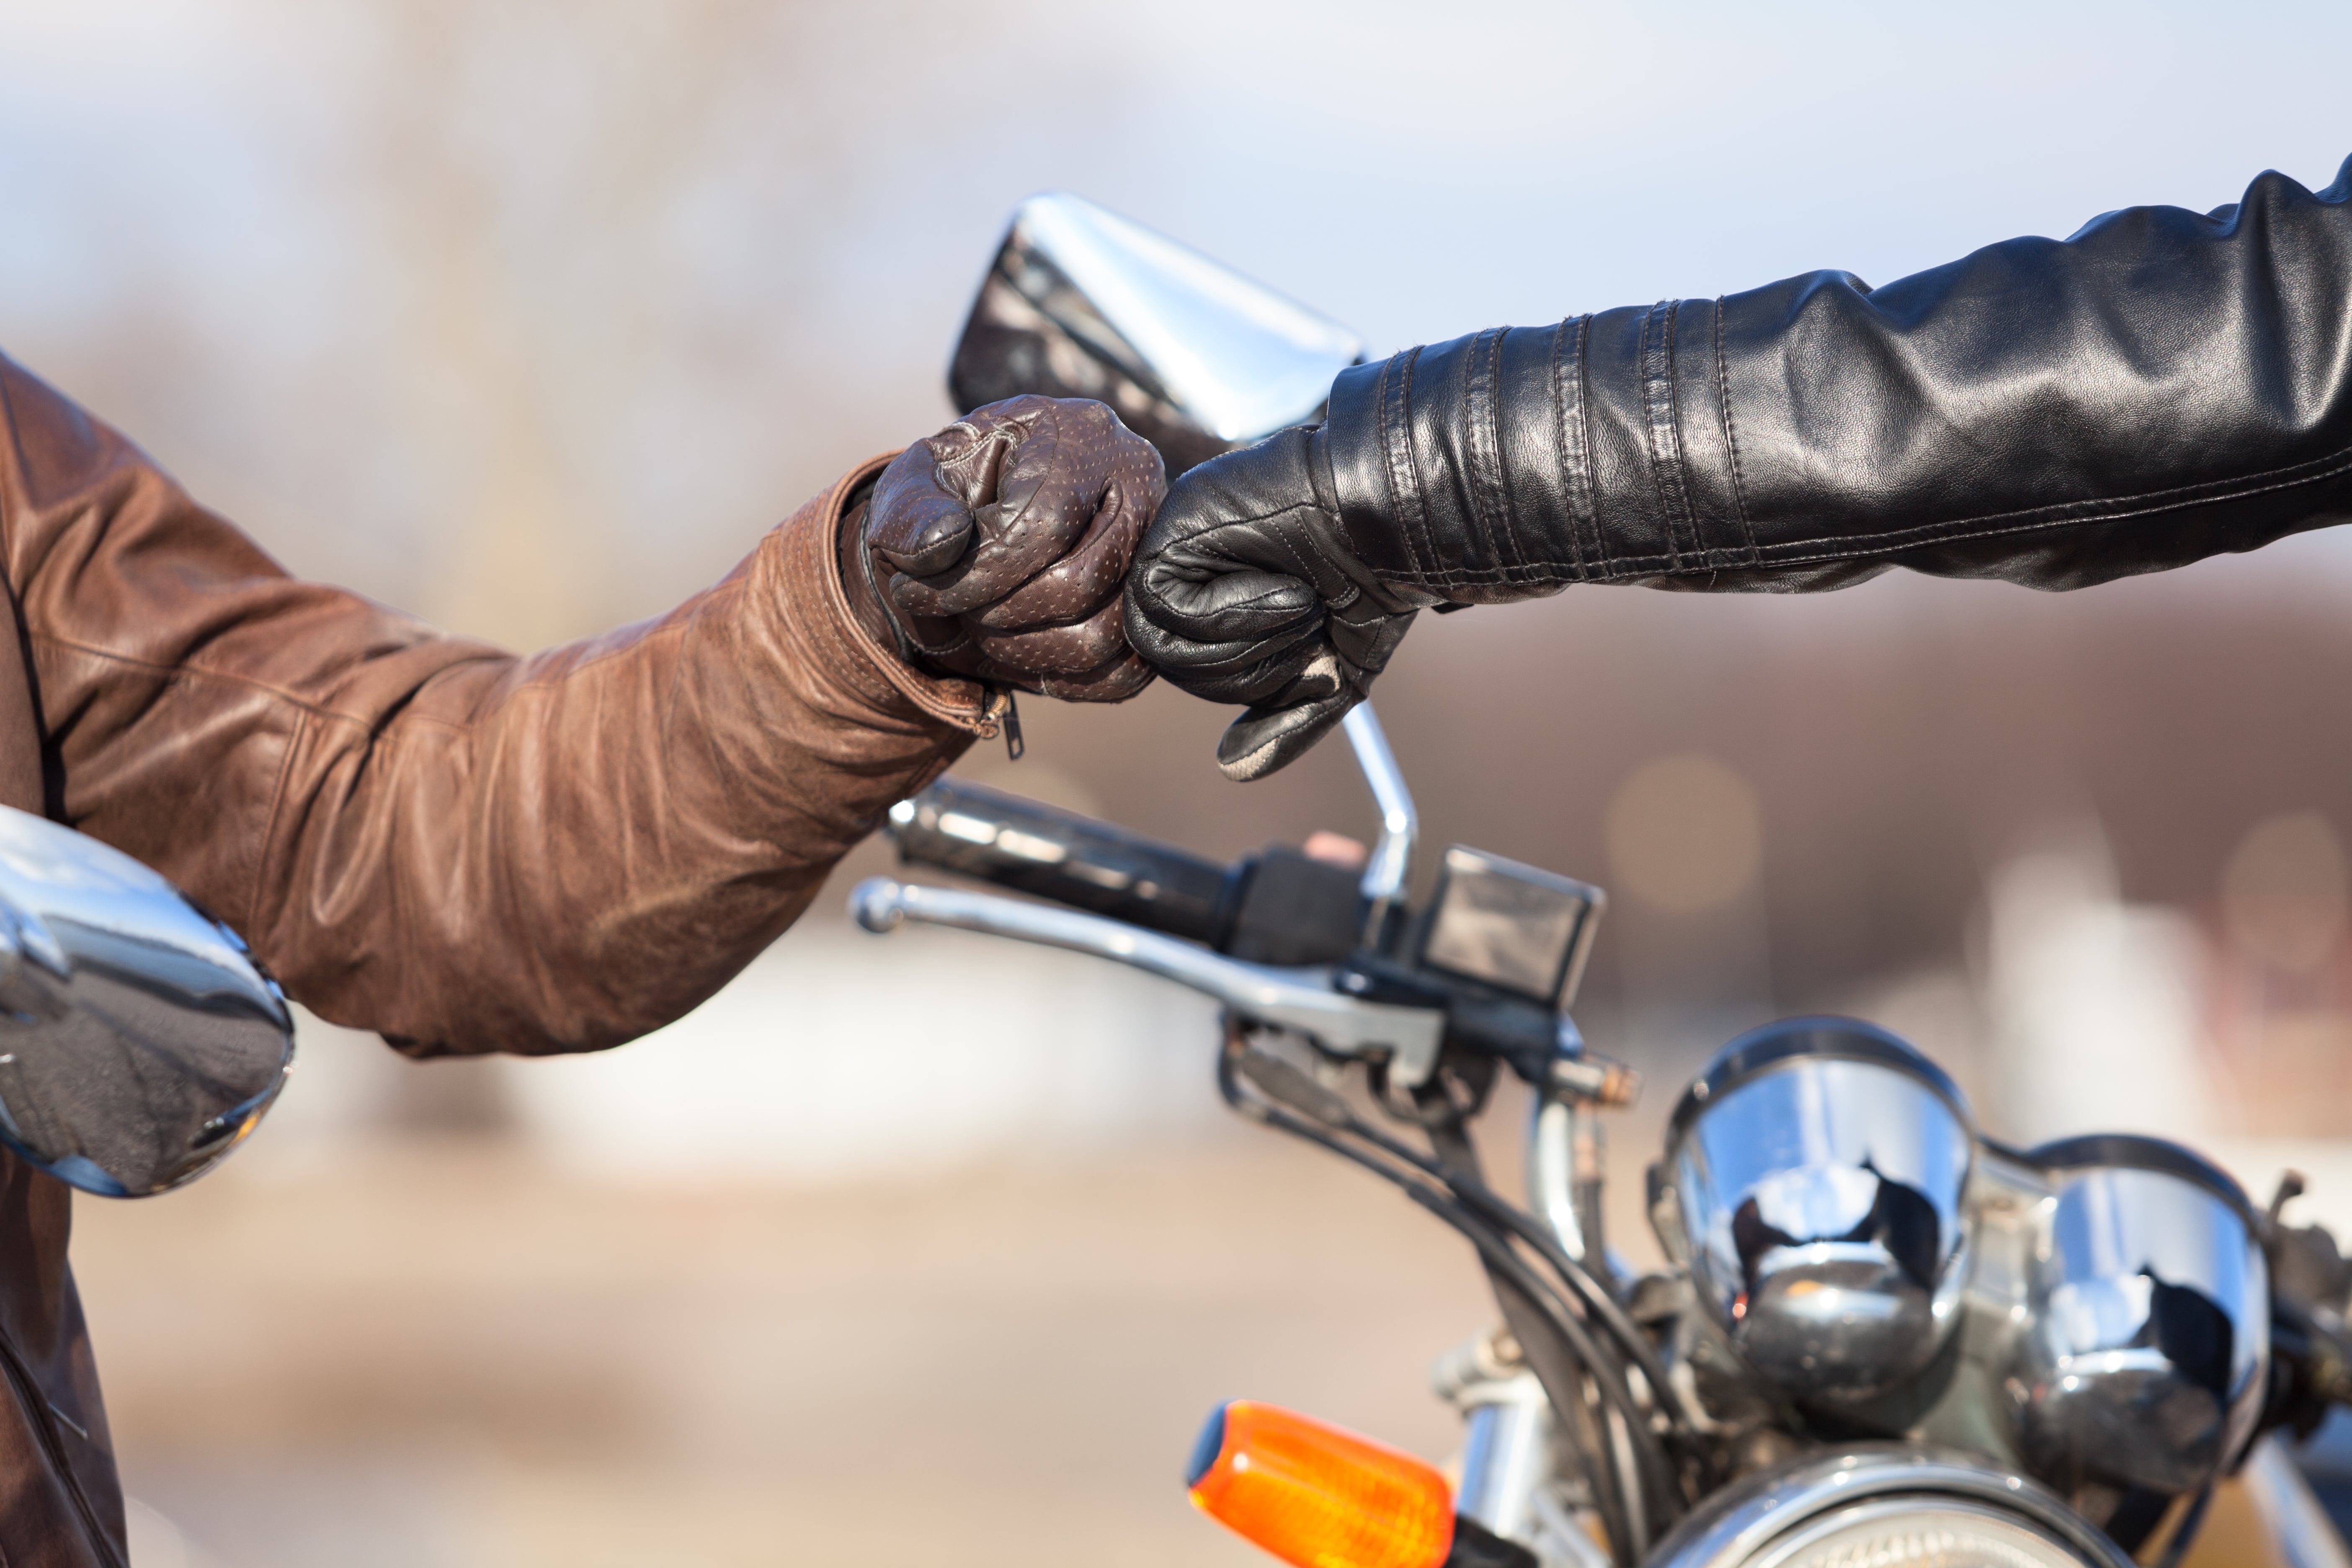 Bien choisir ses gants moto : le guide complet